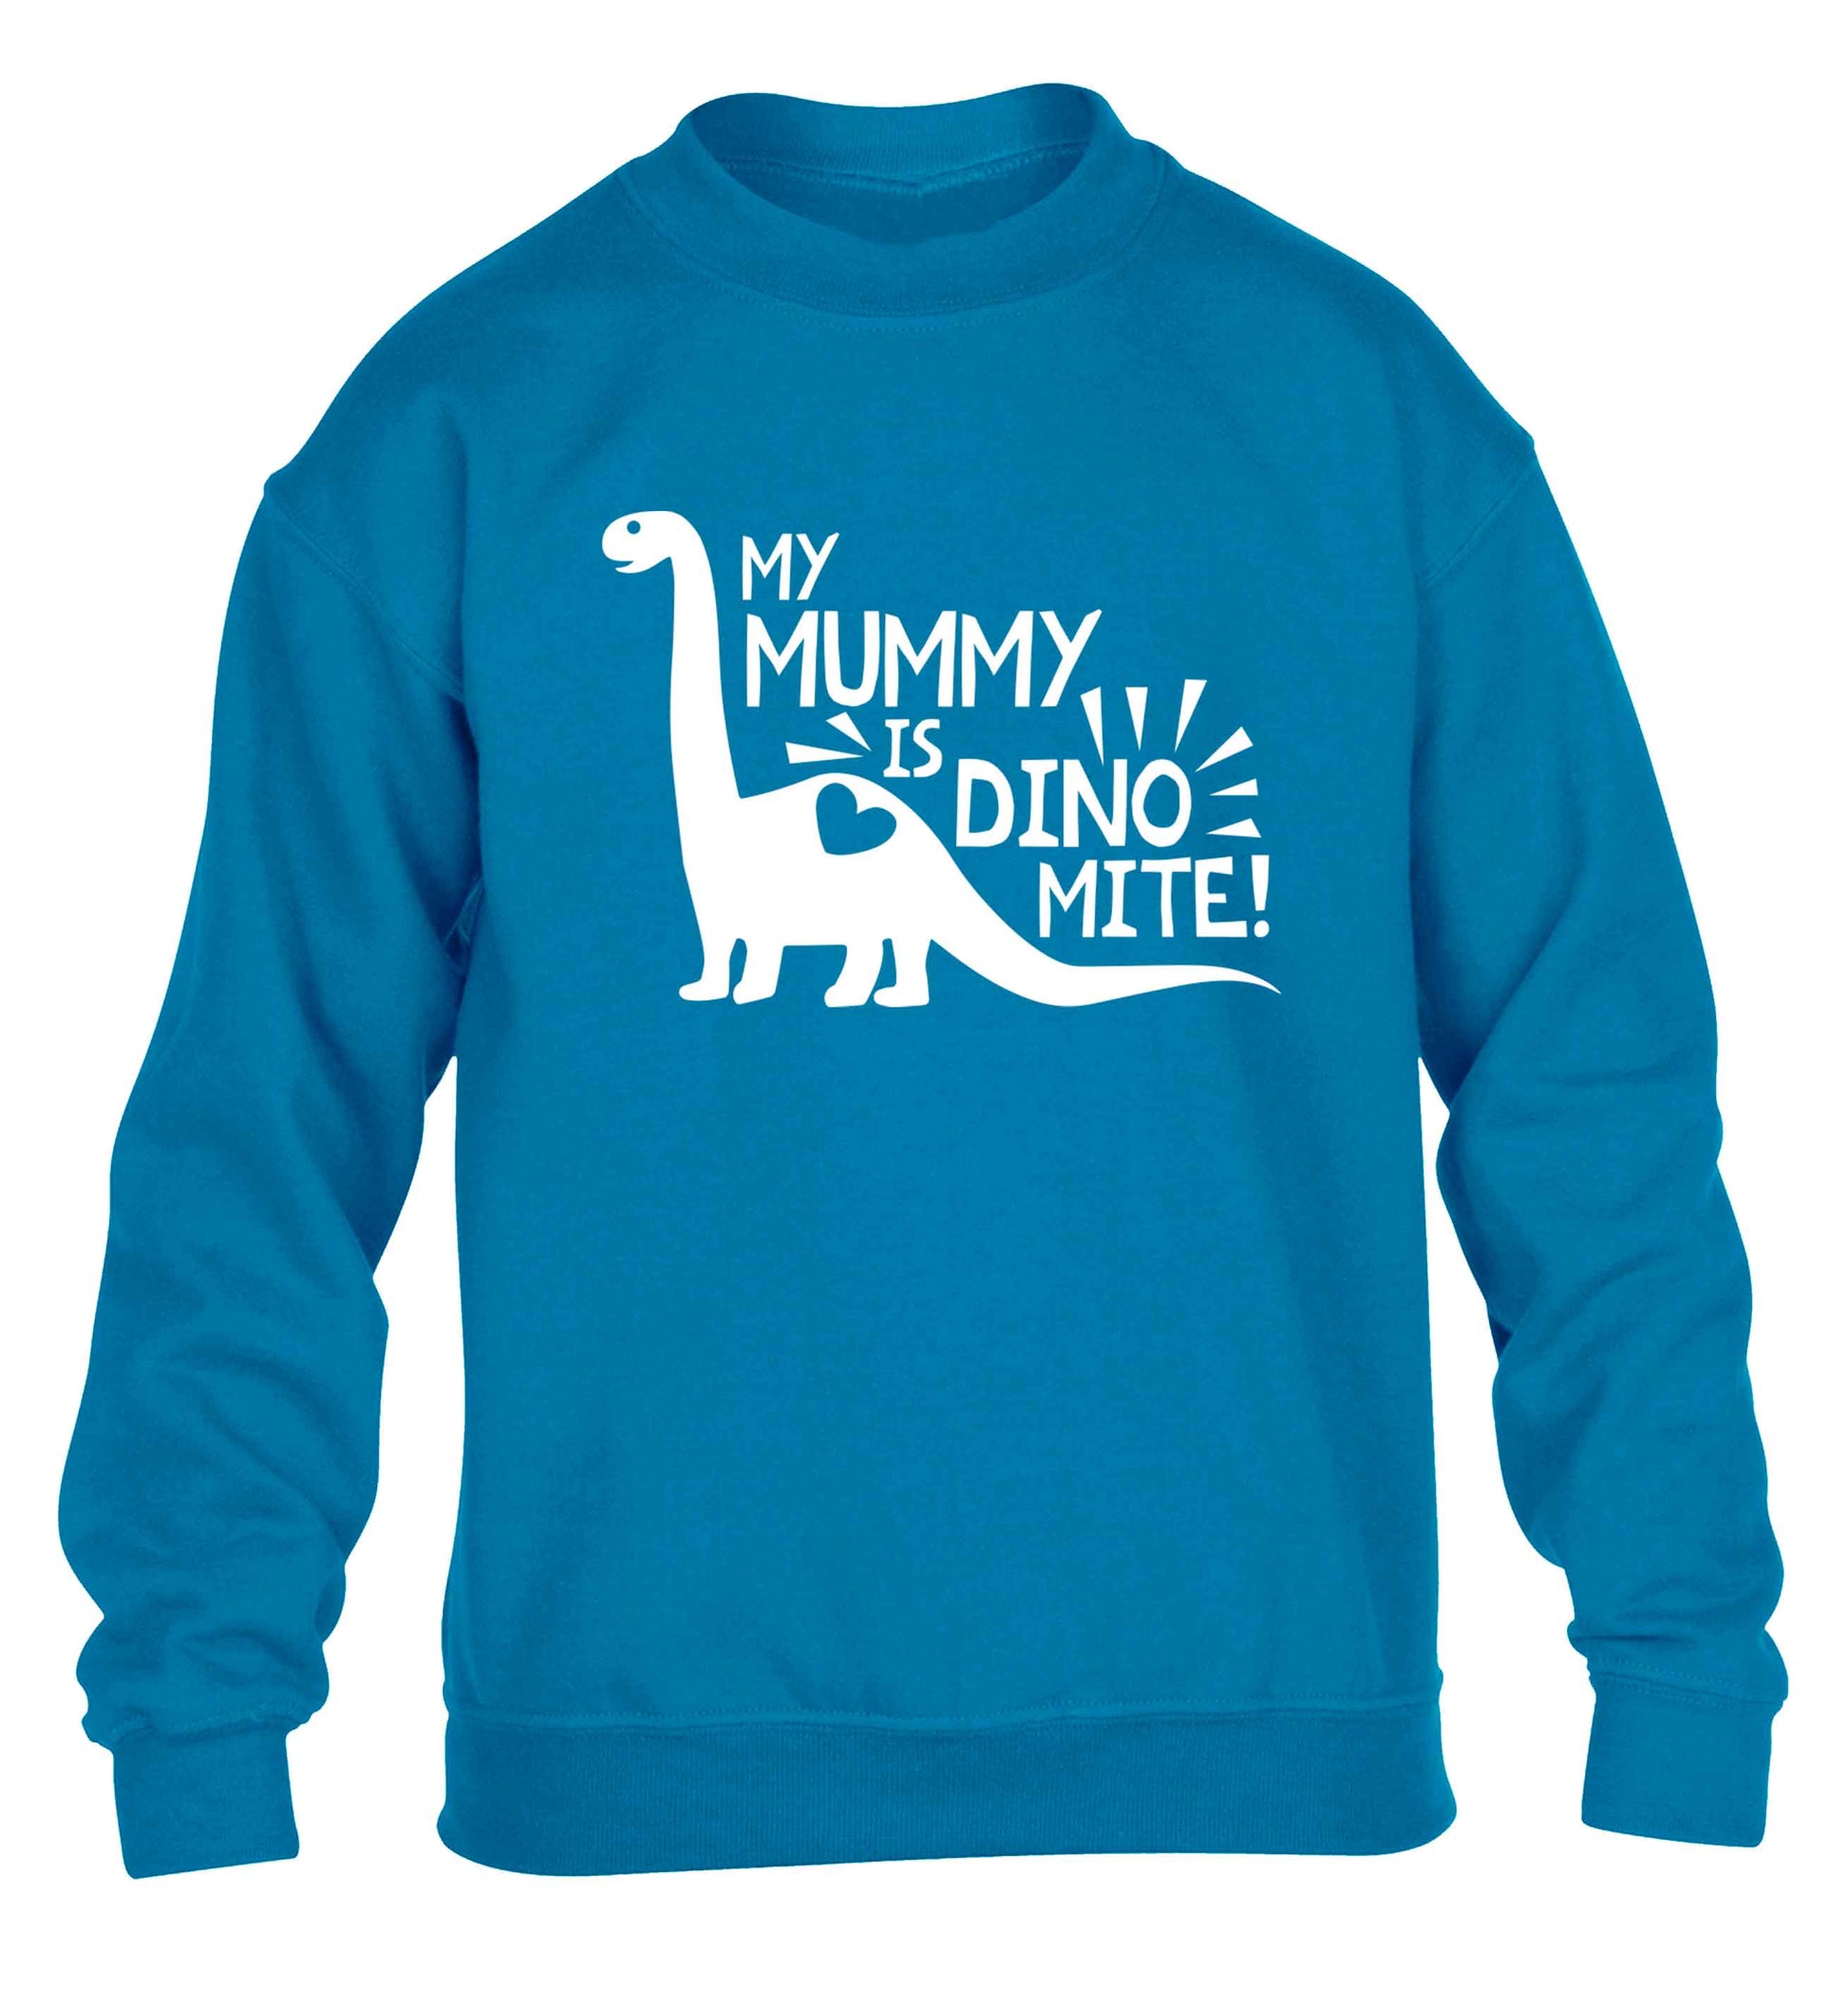 My mummy is dinomite children's blue sweater 12-13 Years